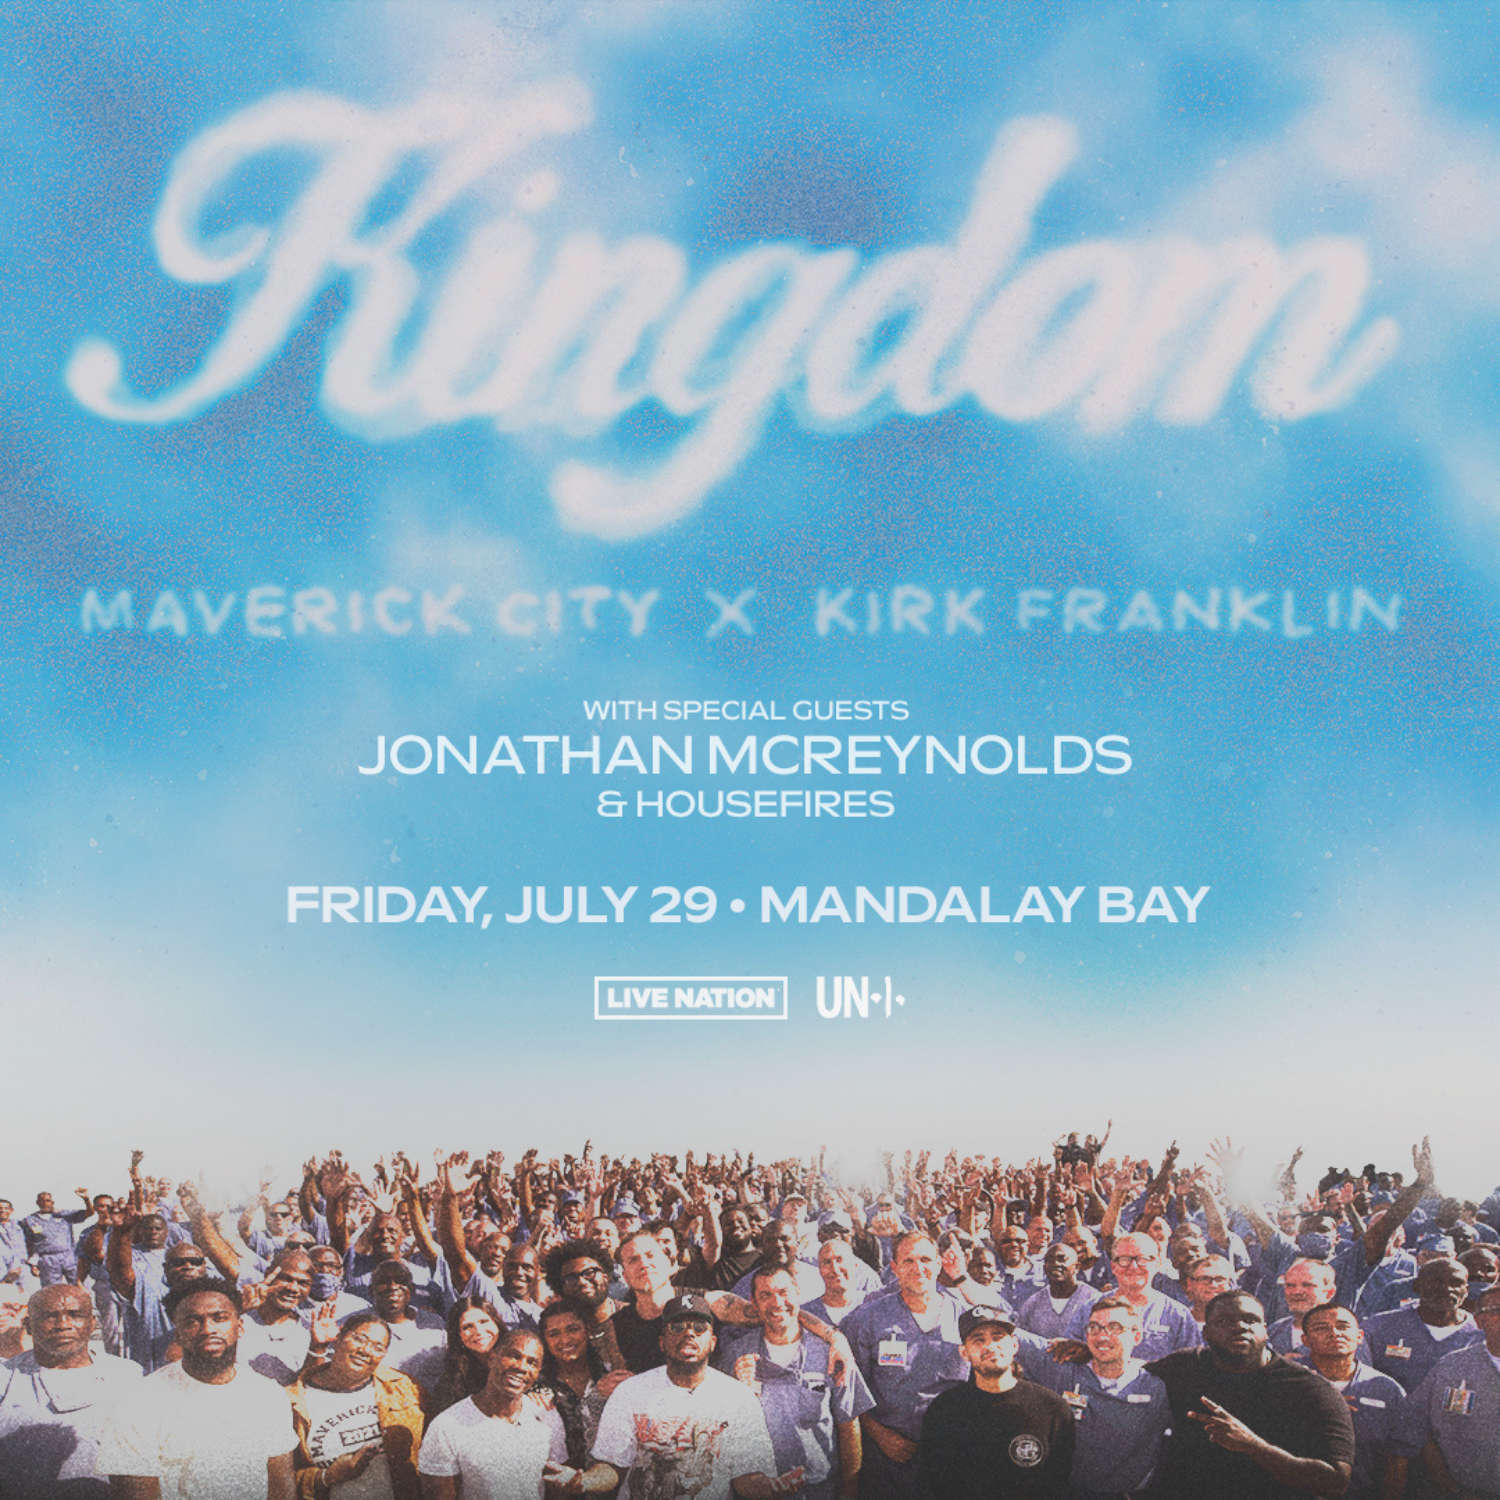 Maverick City Music / Kirk Franklin